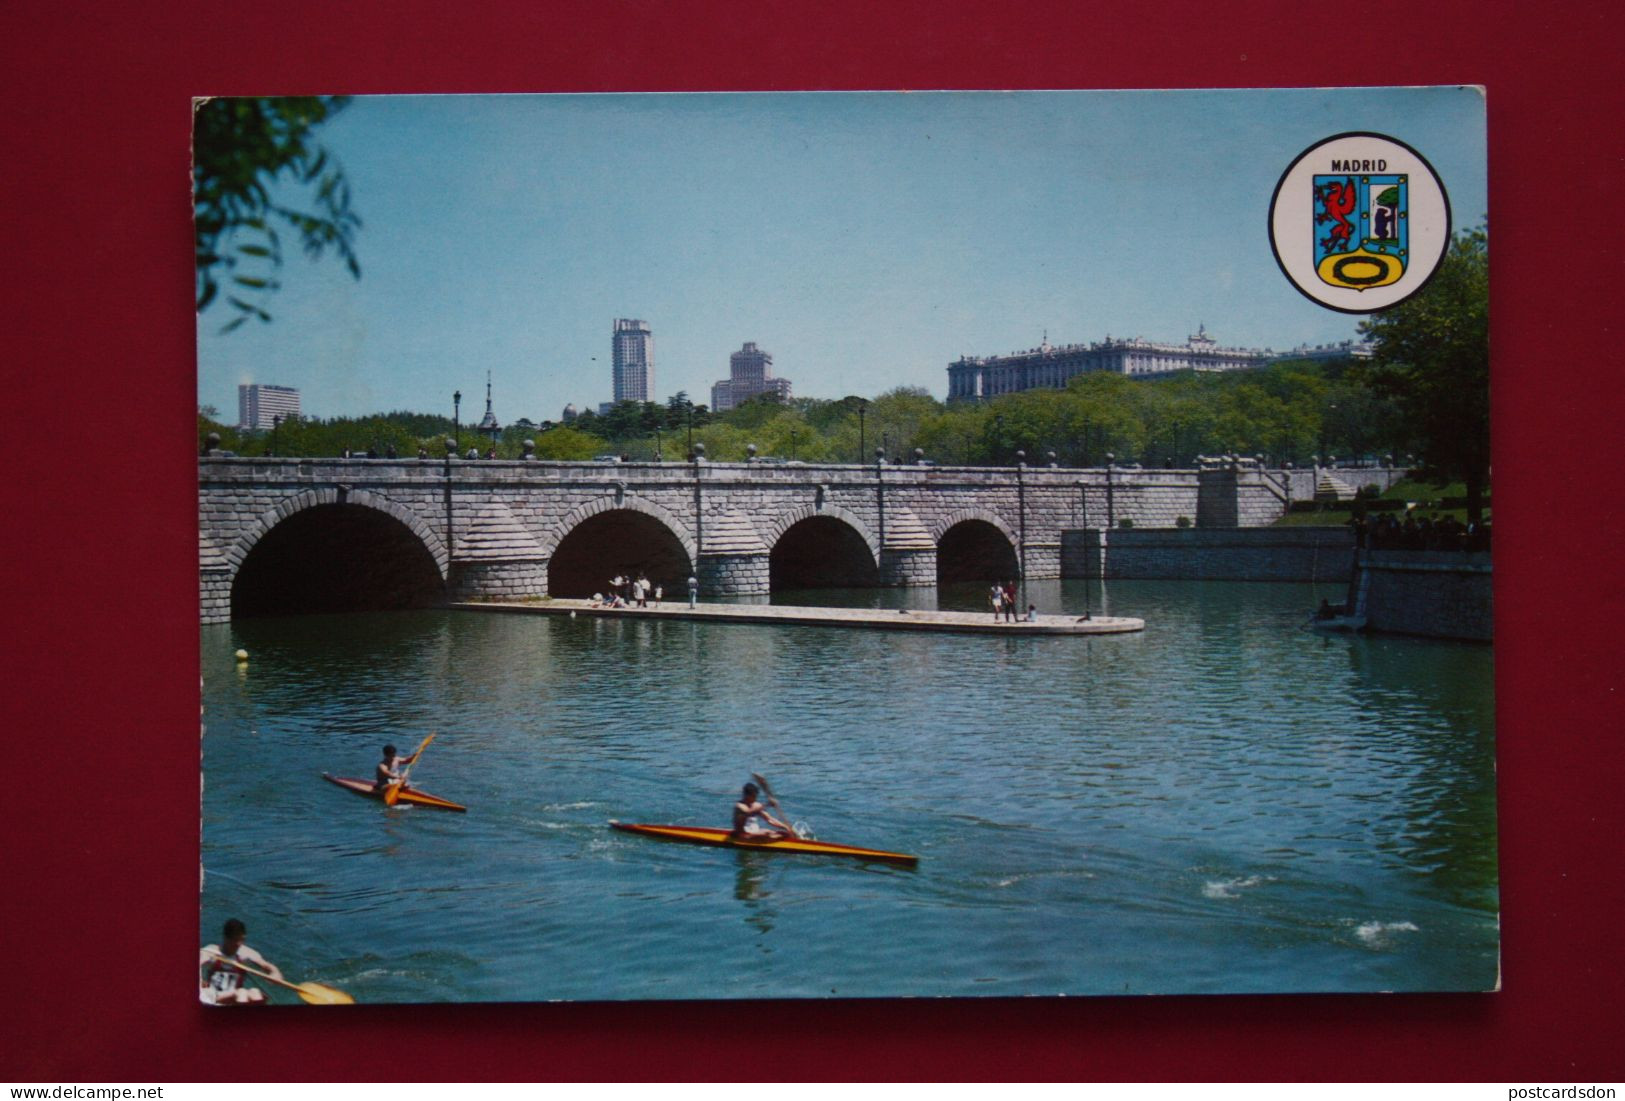 Postcard Madrid -   Segovia Bridge- Rowing -  1970s  KAYAK - Aviron